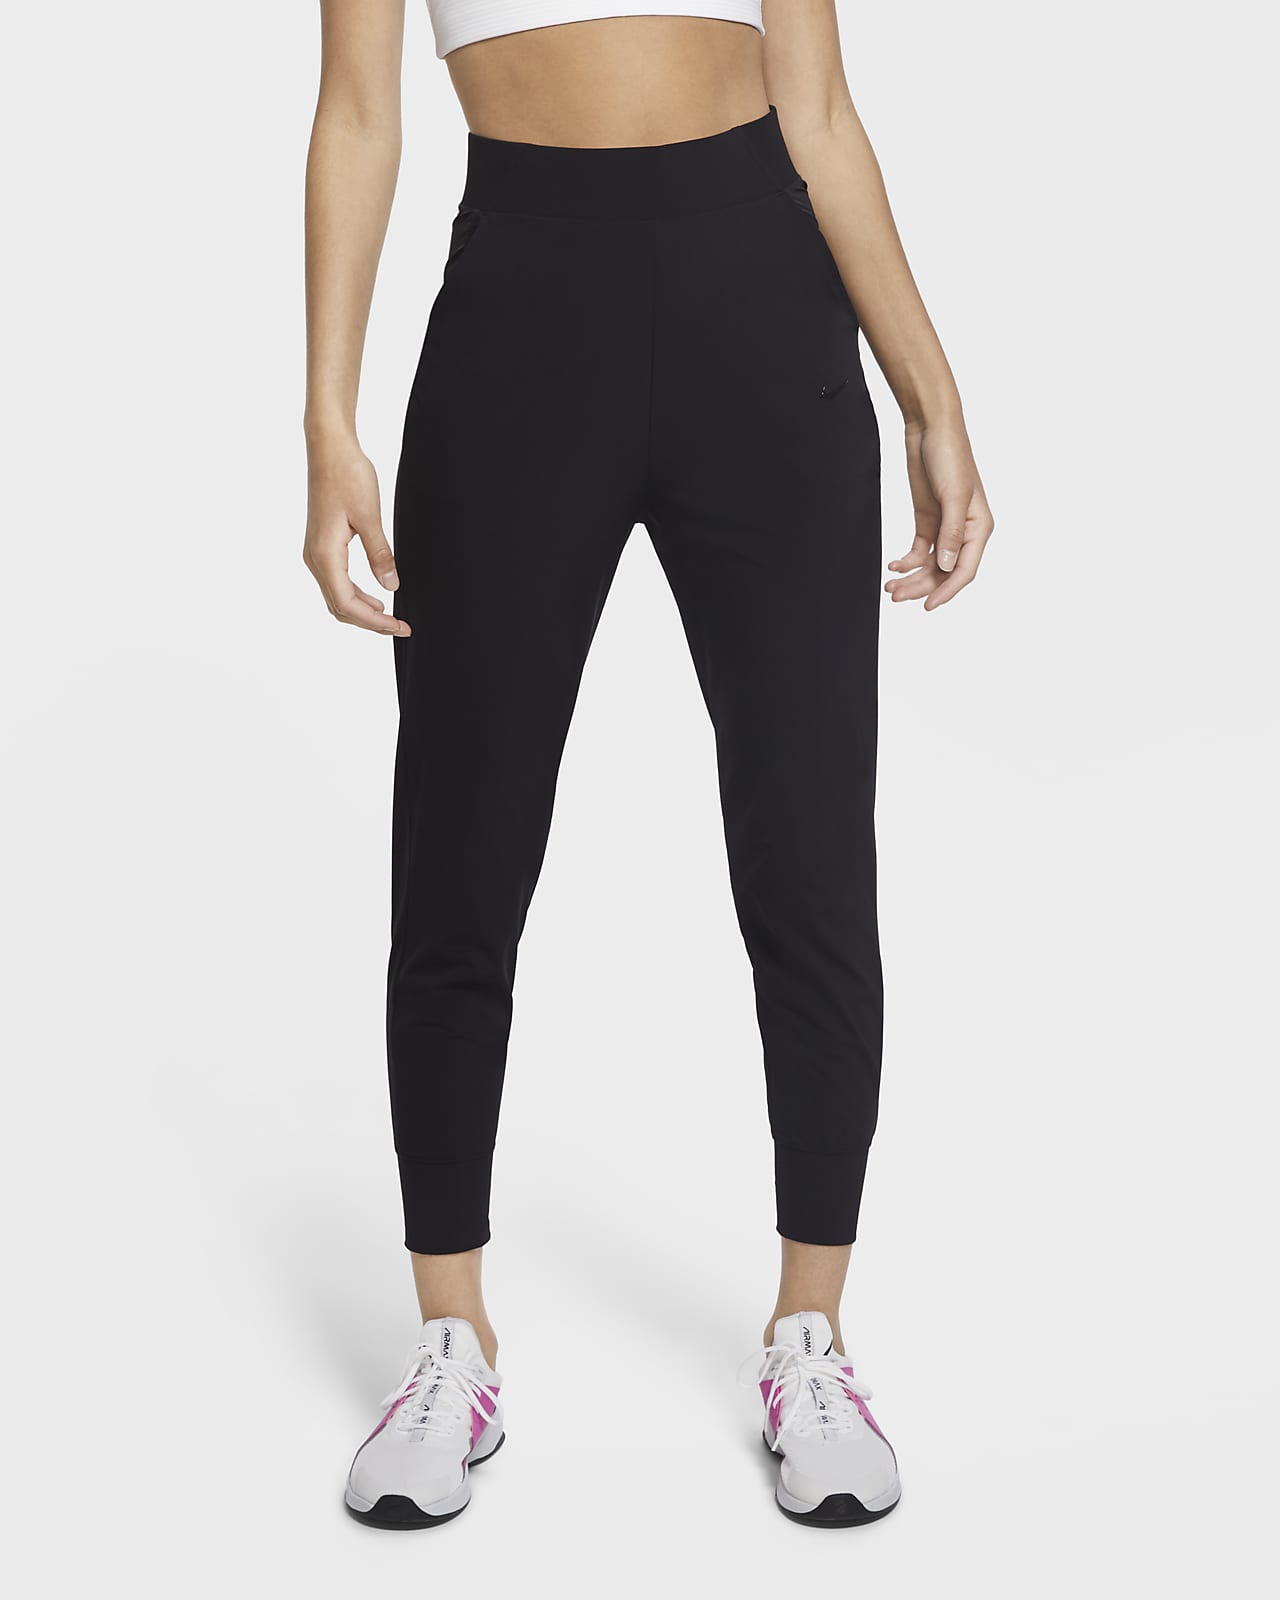 Women Push Up Fitness Leggings Pockets Sport Yoga Pants Workout Gym Trousers  | eBay